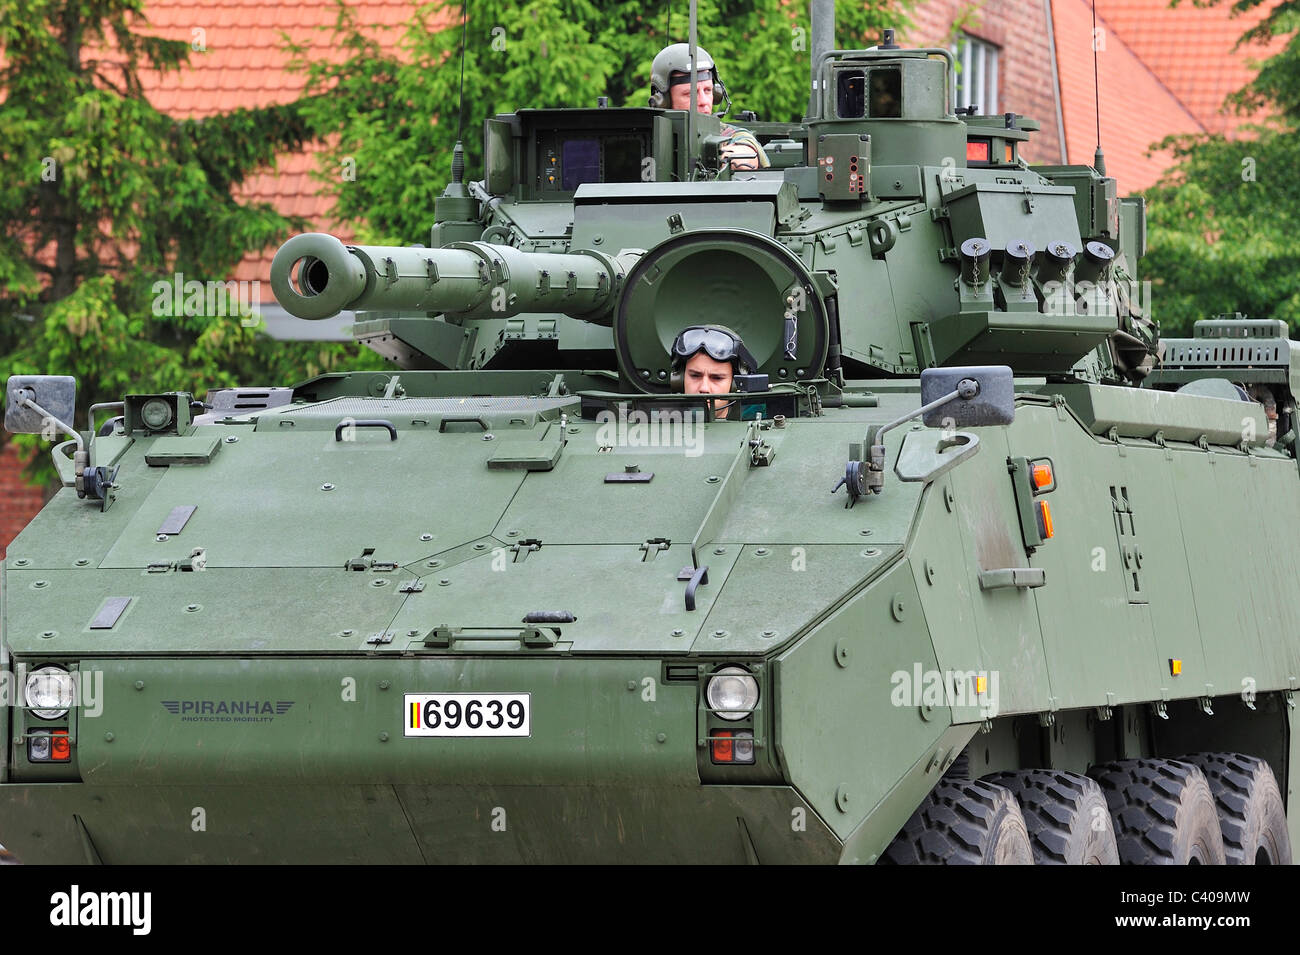 Fahrer und Kommandant im Turm des MOWAG Piranha IIIC gepanzerten Kampffahrzeug der belgischen Armee, Belgien Stockfoto